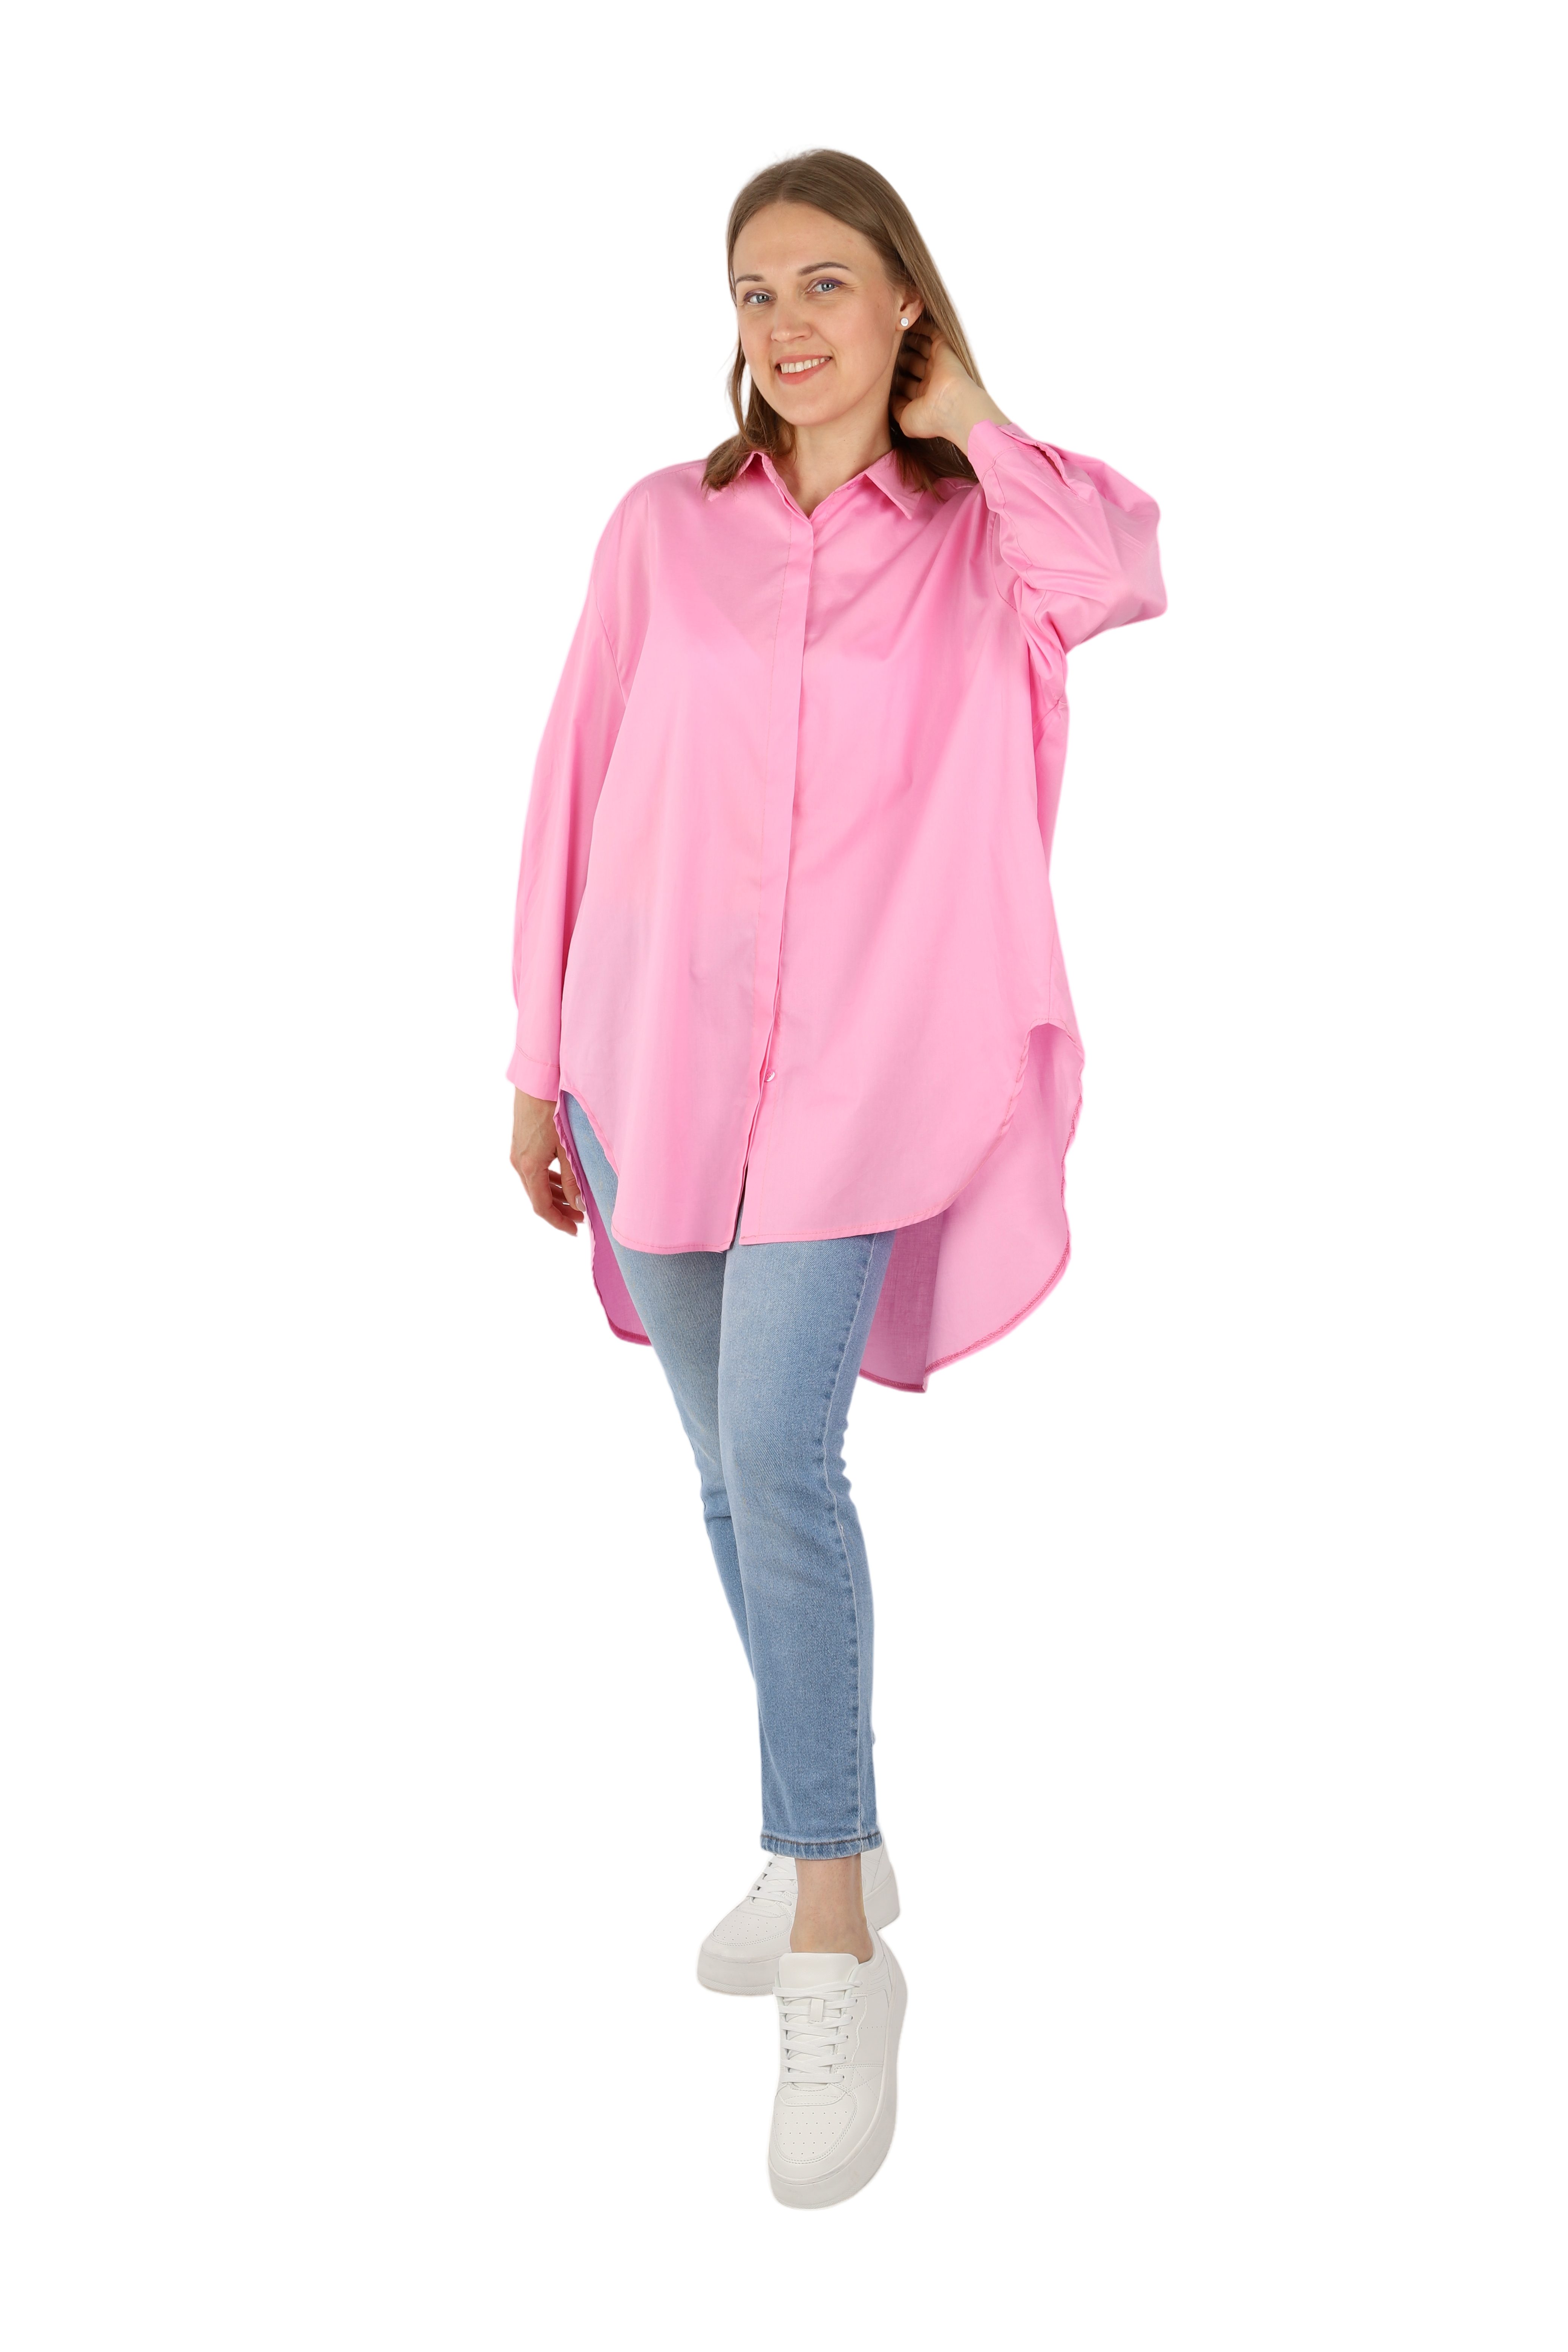 MIRROSI Longbluse Damen 100% Baumwolle Bluse Lang OVERSIZE Design (Onesize (Passt Gr. 36 bis Gr.46) Langarm Hemdbluse Made in Italy